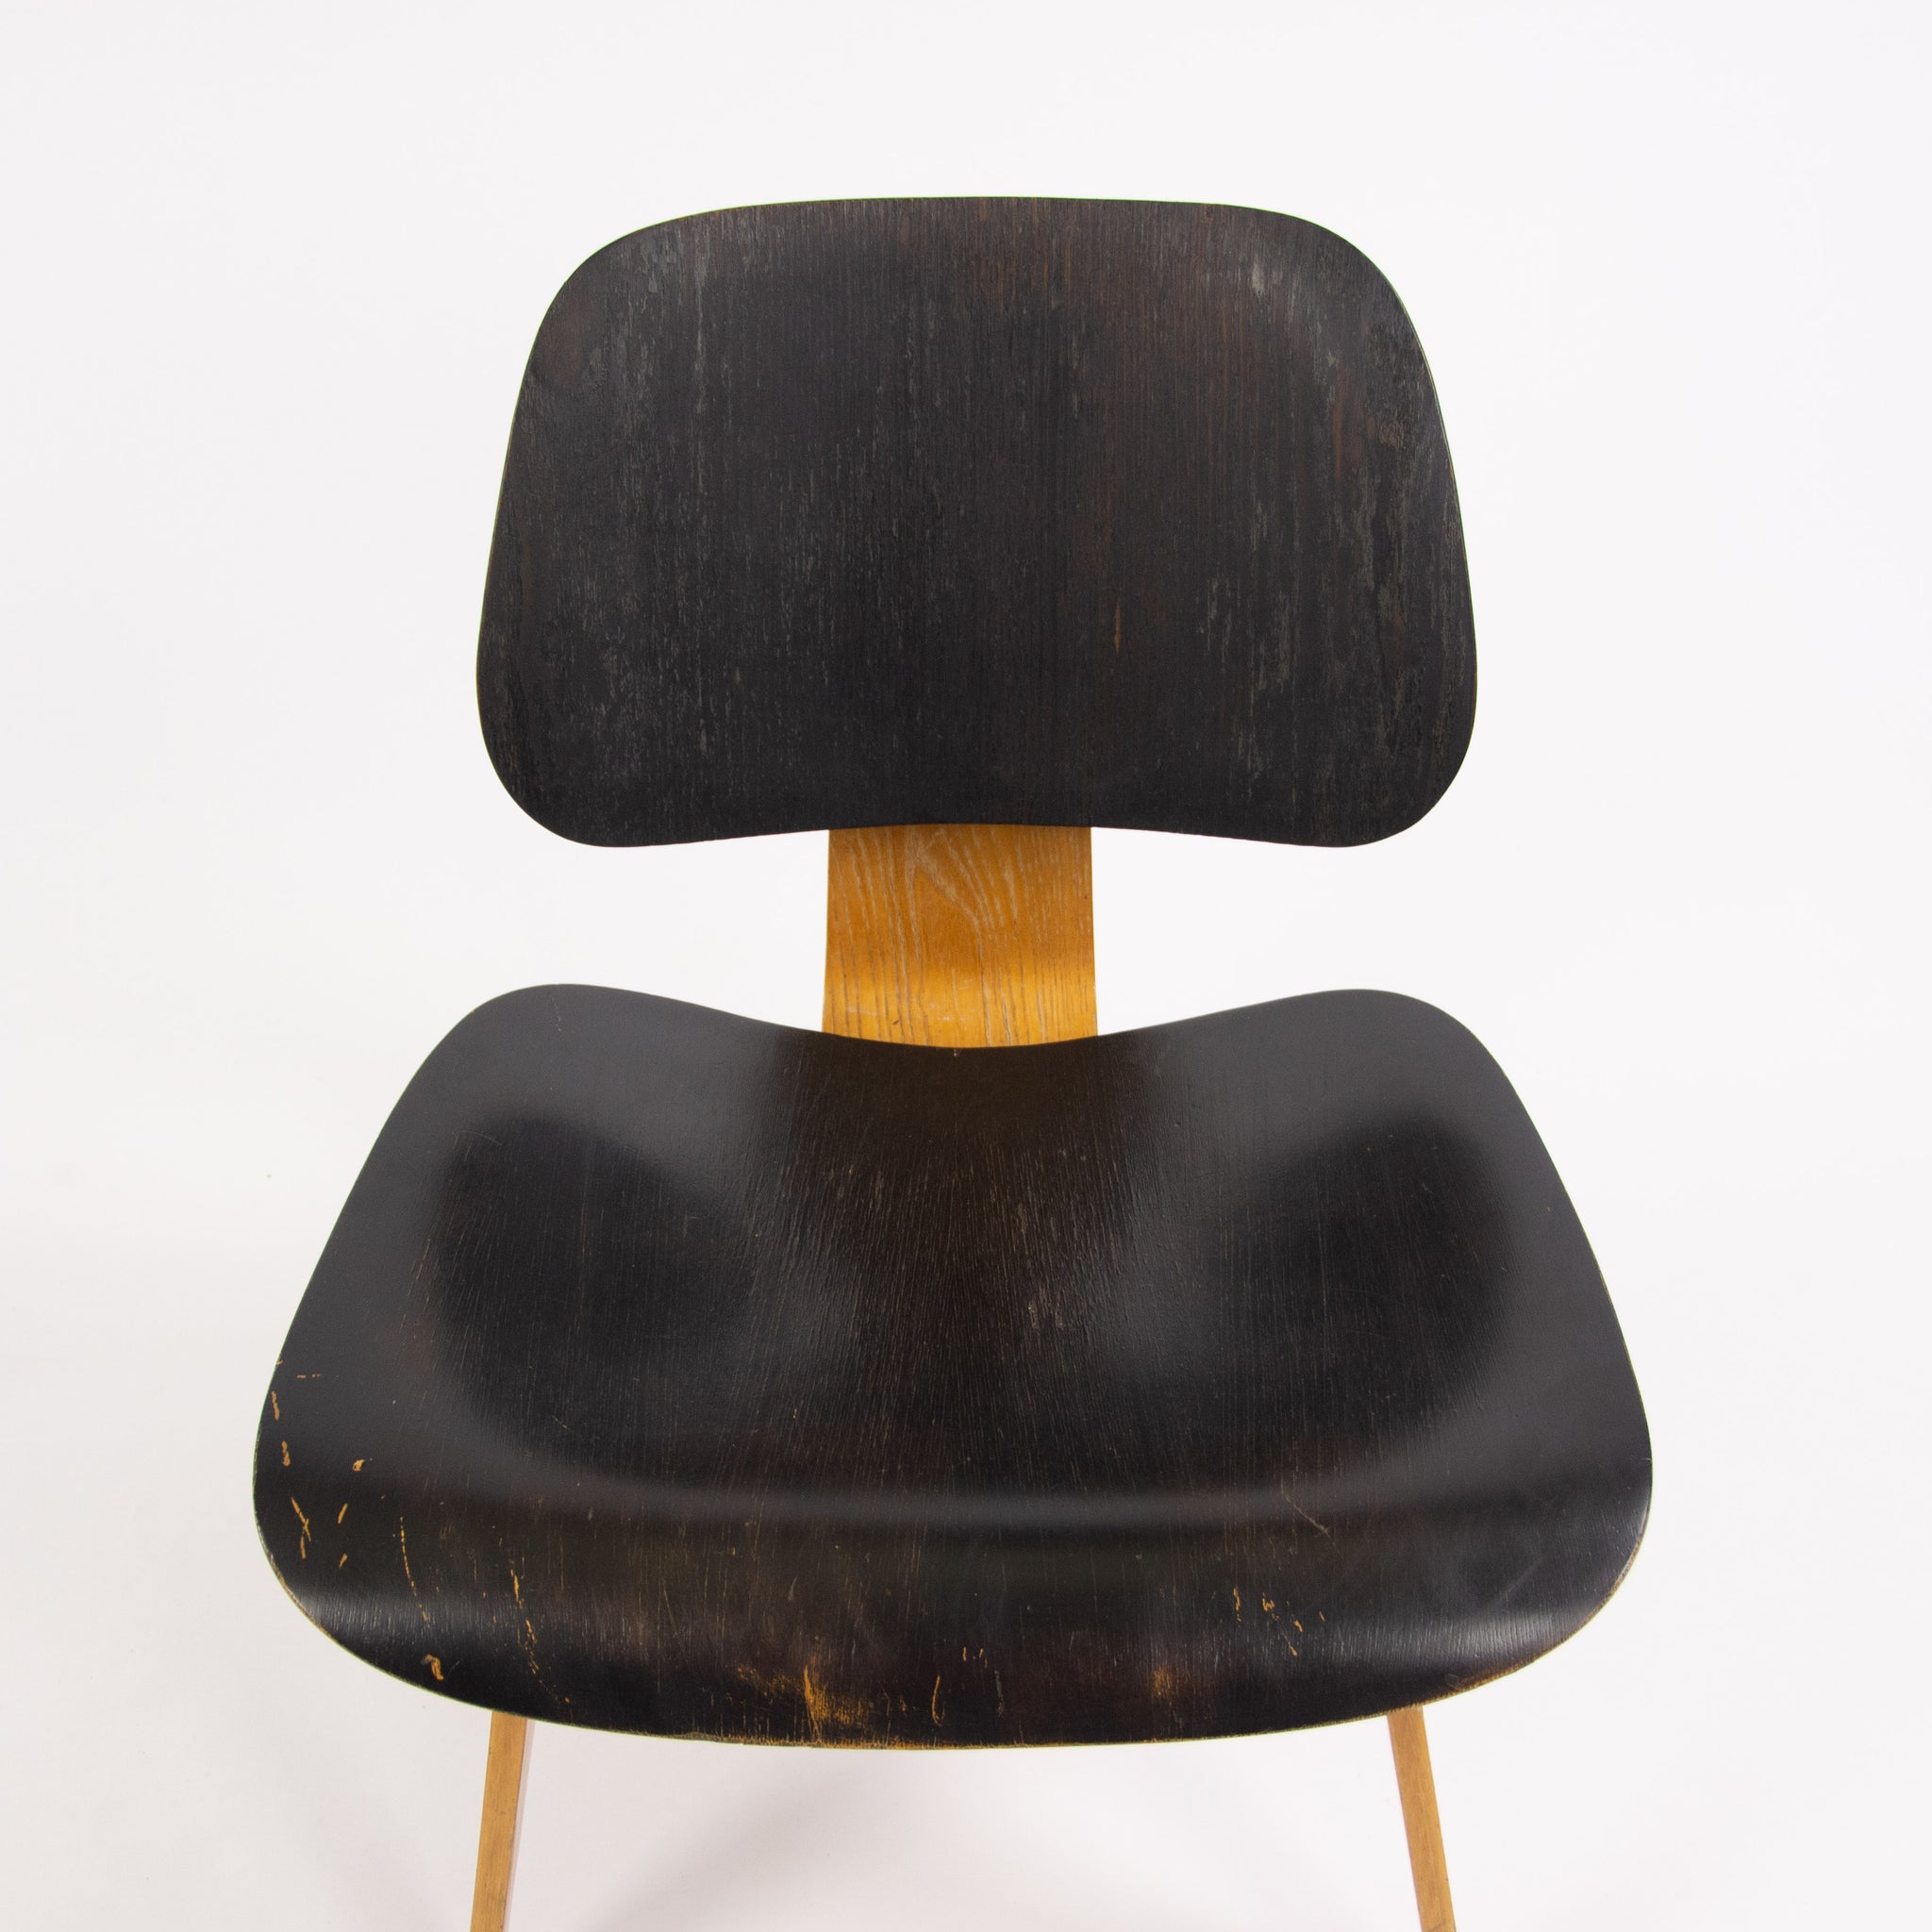 SOLD 1953 Rare Eames Herman Miller LCW Lounge Chair Wood Calico Ash Dual Tone Black